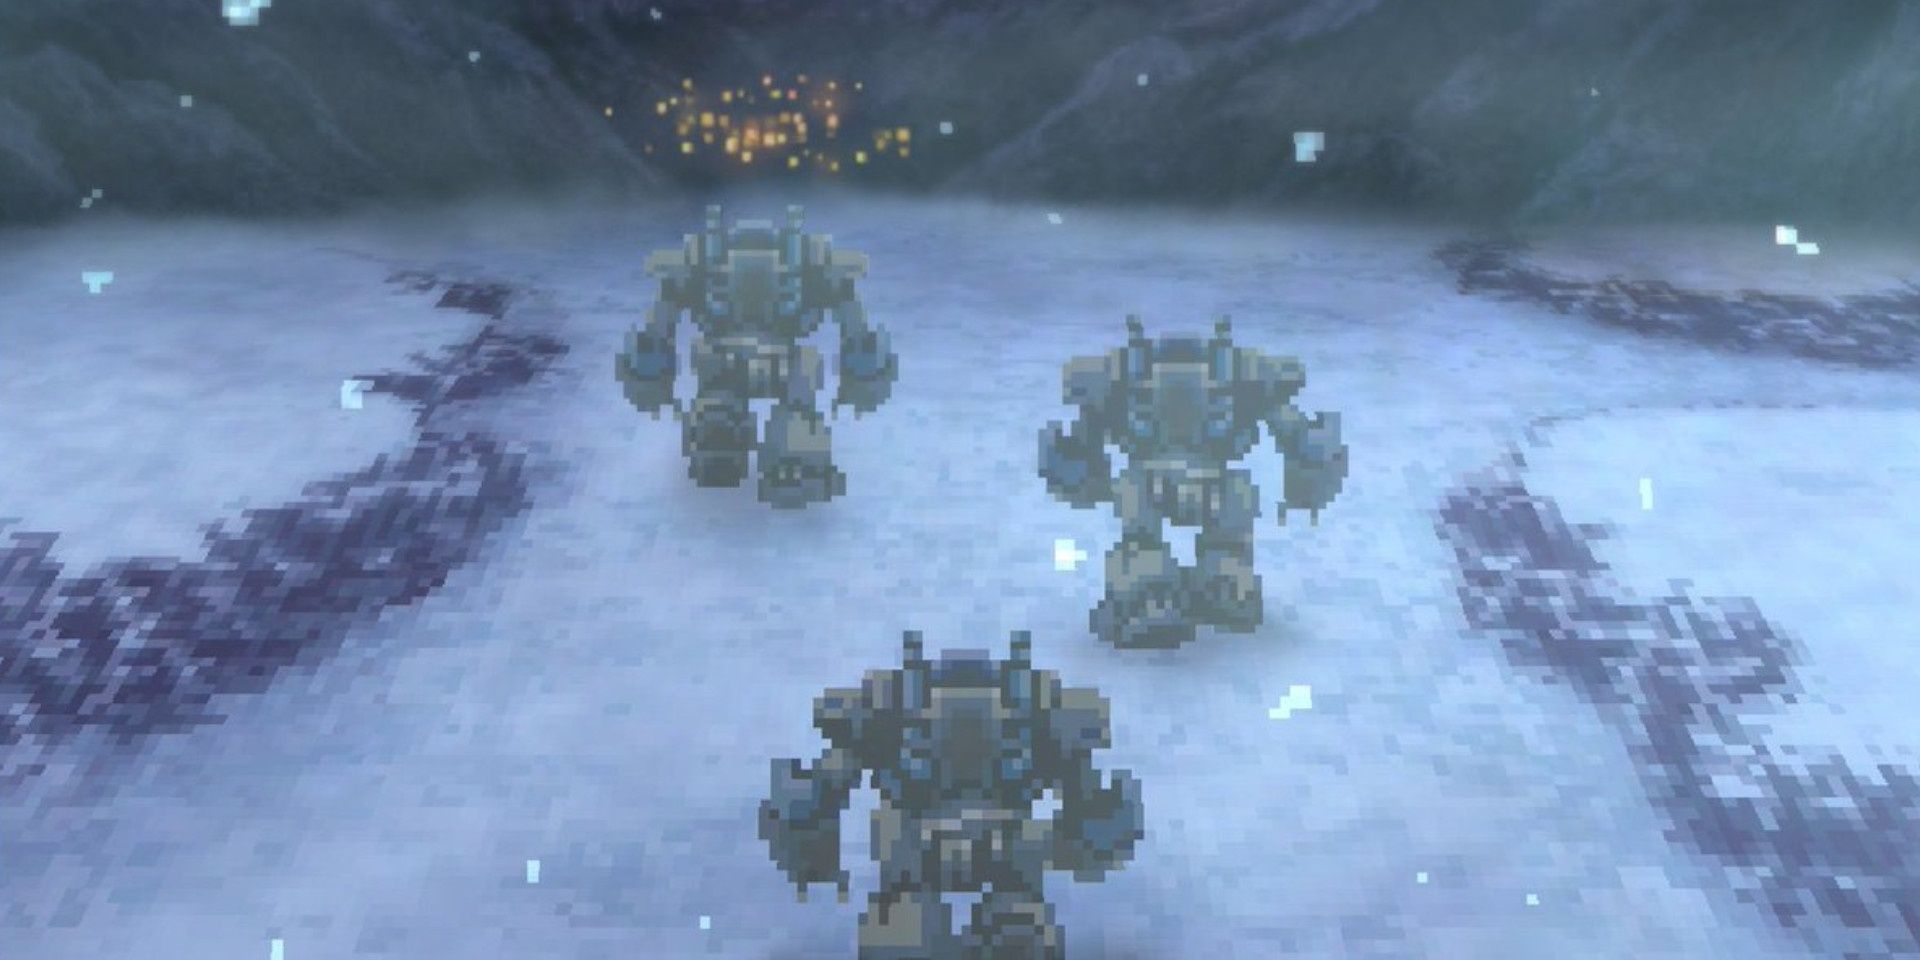 Magitek armor in Final Fantasy 6